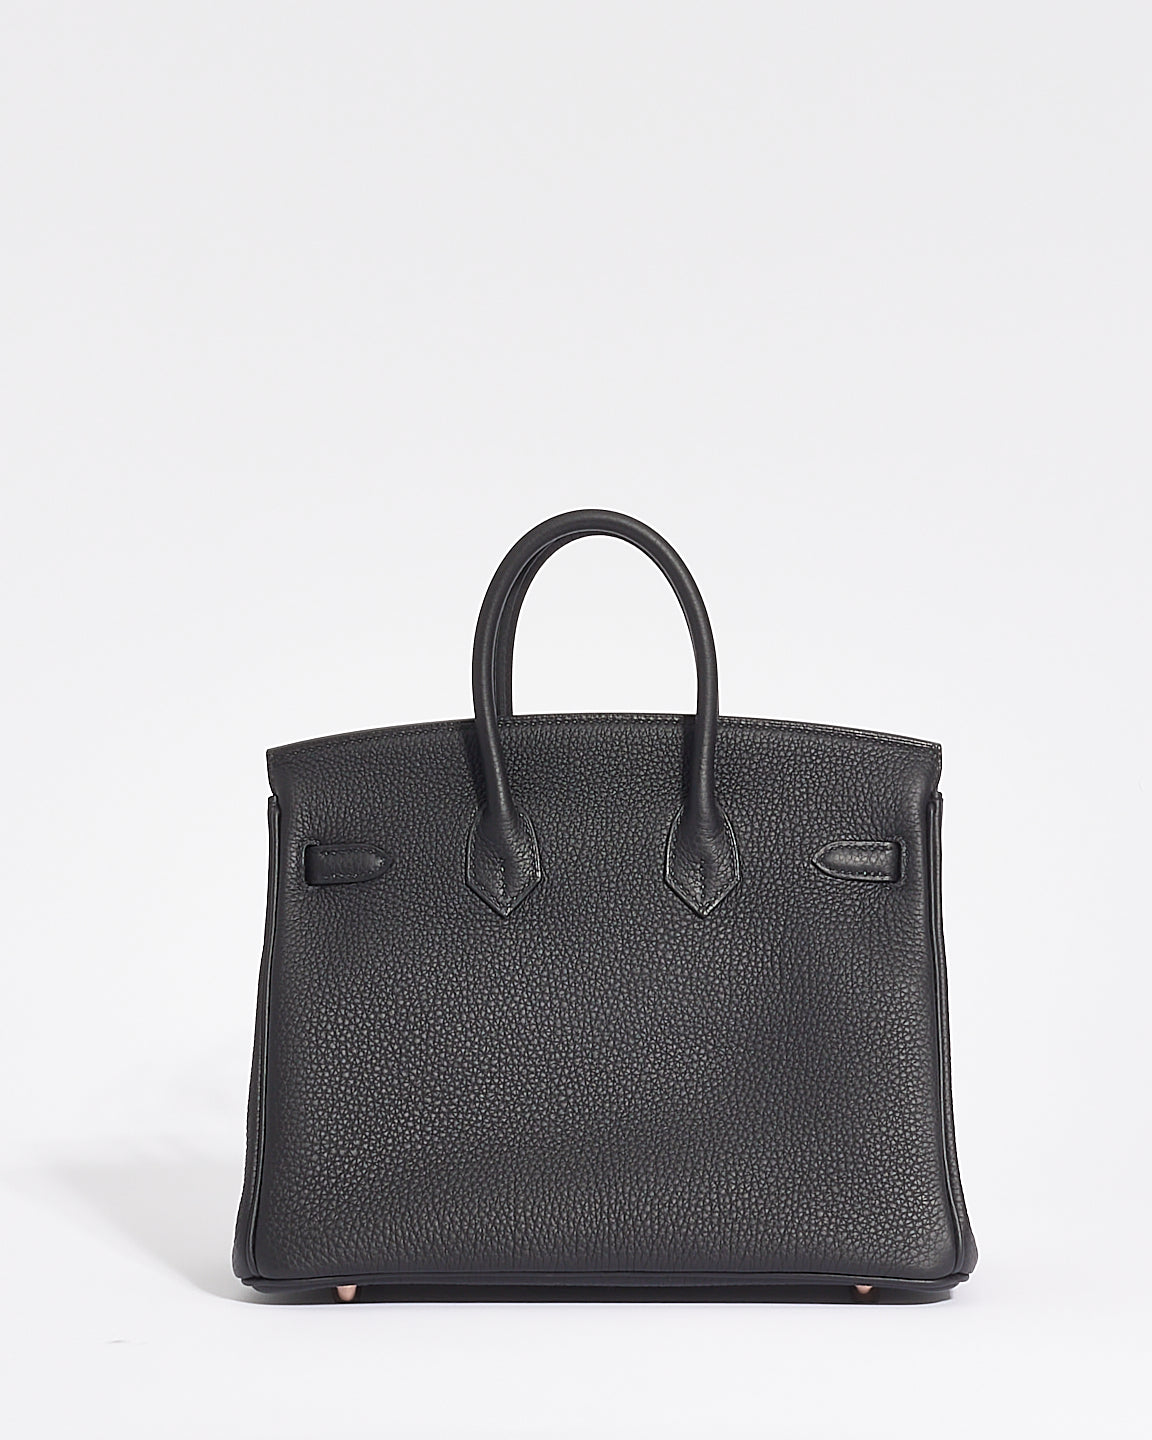 Hermès Black Togo Leather Birkin 25 with Rose Gold Hardware